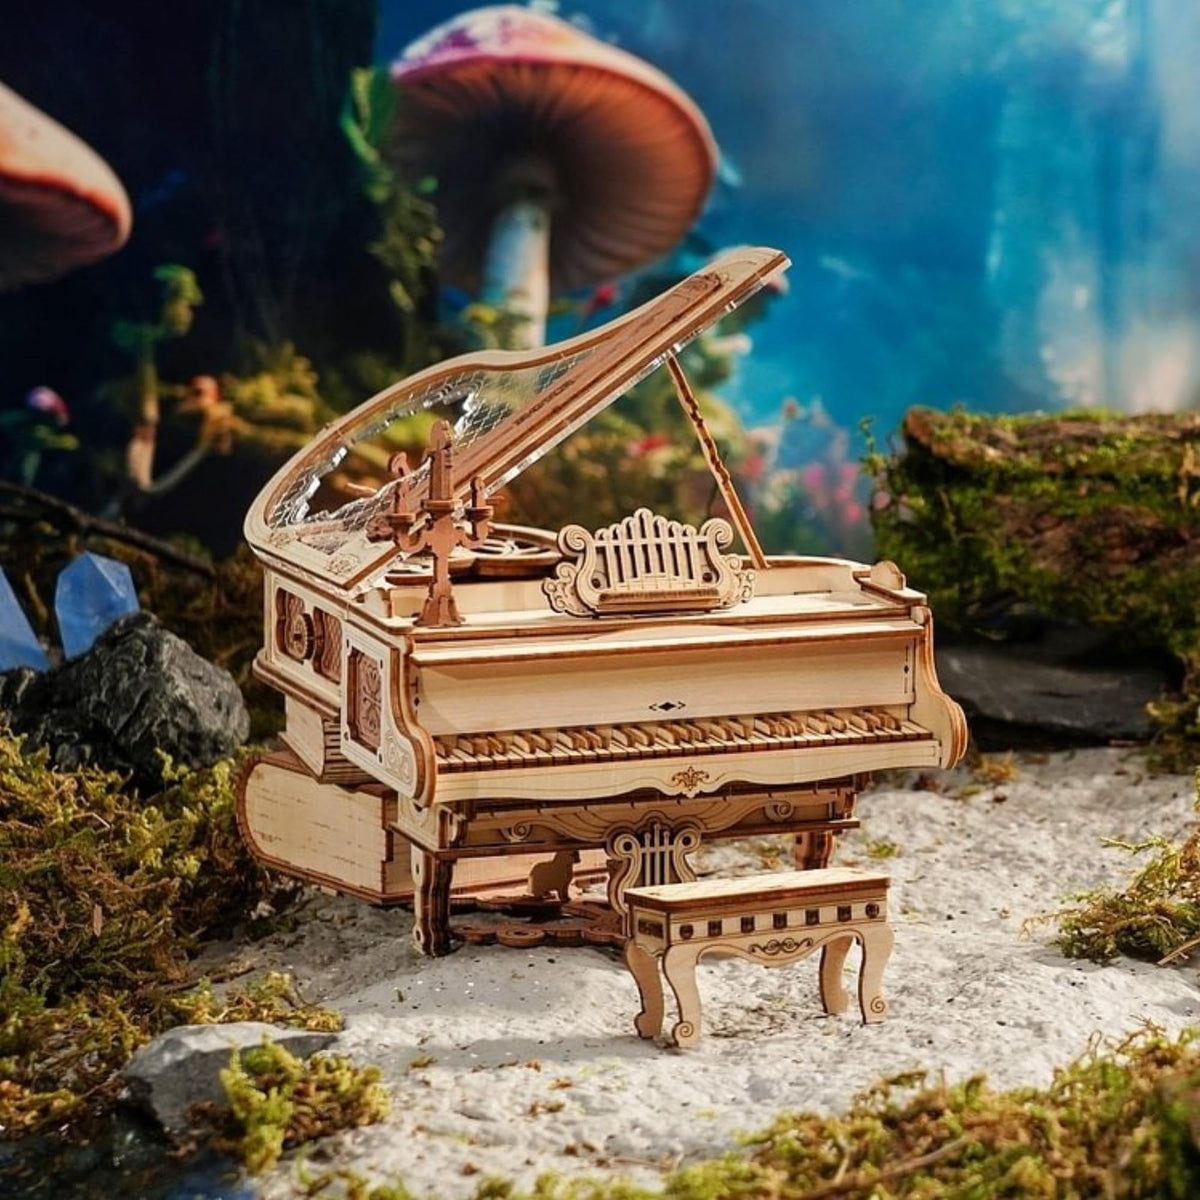 ROBOTIME AMK81 Magic Piano 3D Puzzles for Adults-Mechanical 3D Puzzles Musical Instrument-Wooden Music Box Puzzle Kit to Build-Aesthetic Desk Decor Unique Gift for Men/Women